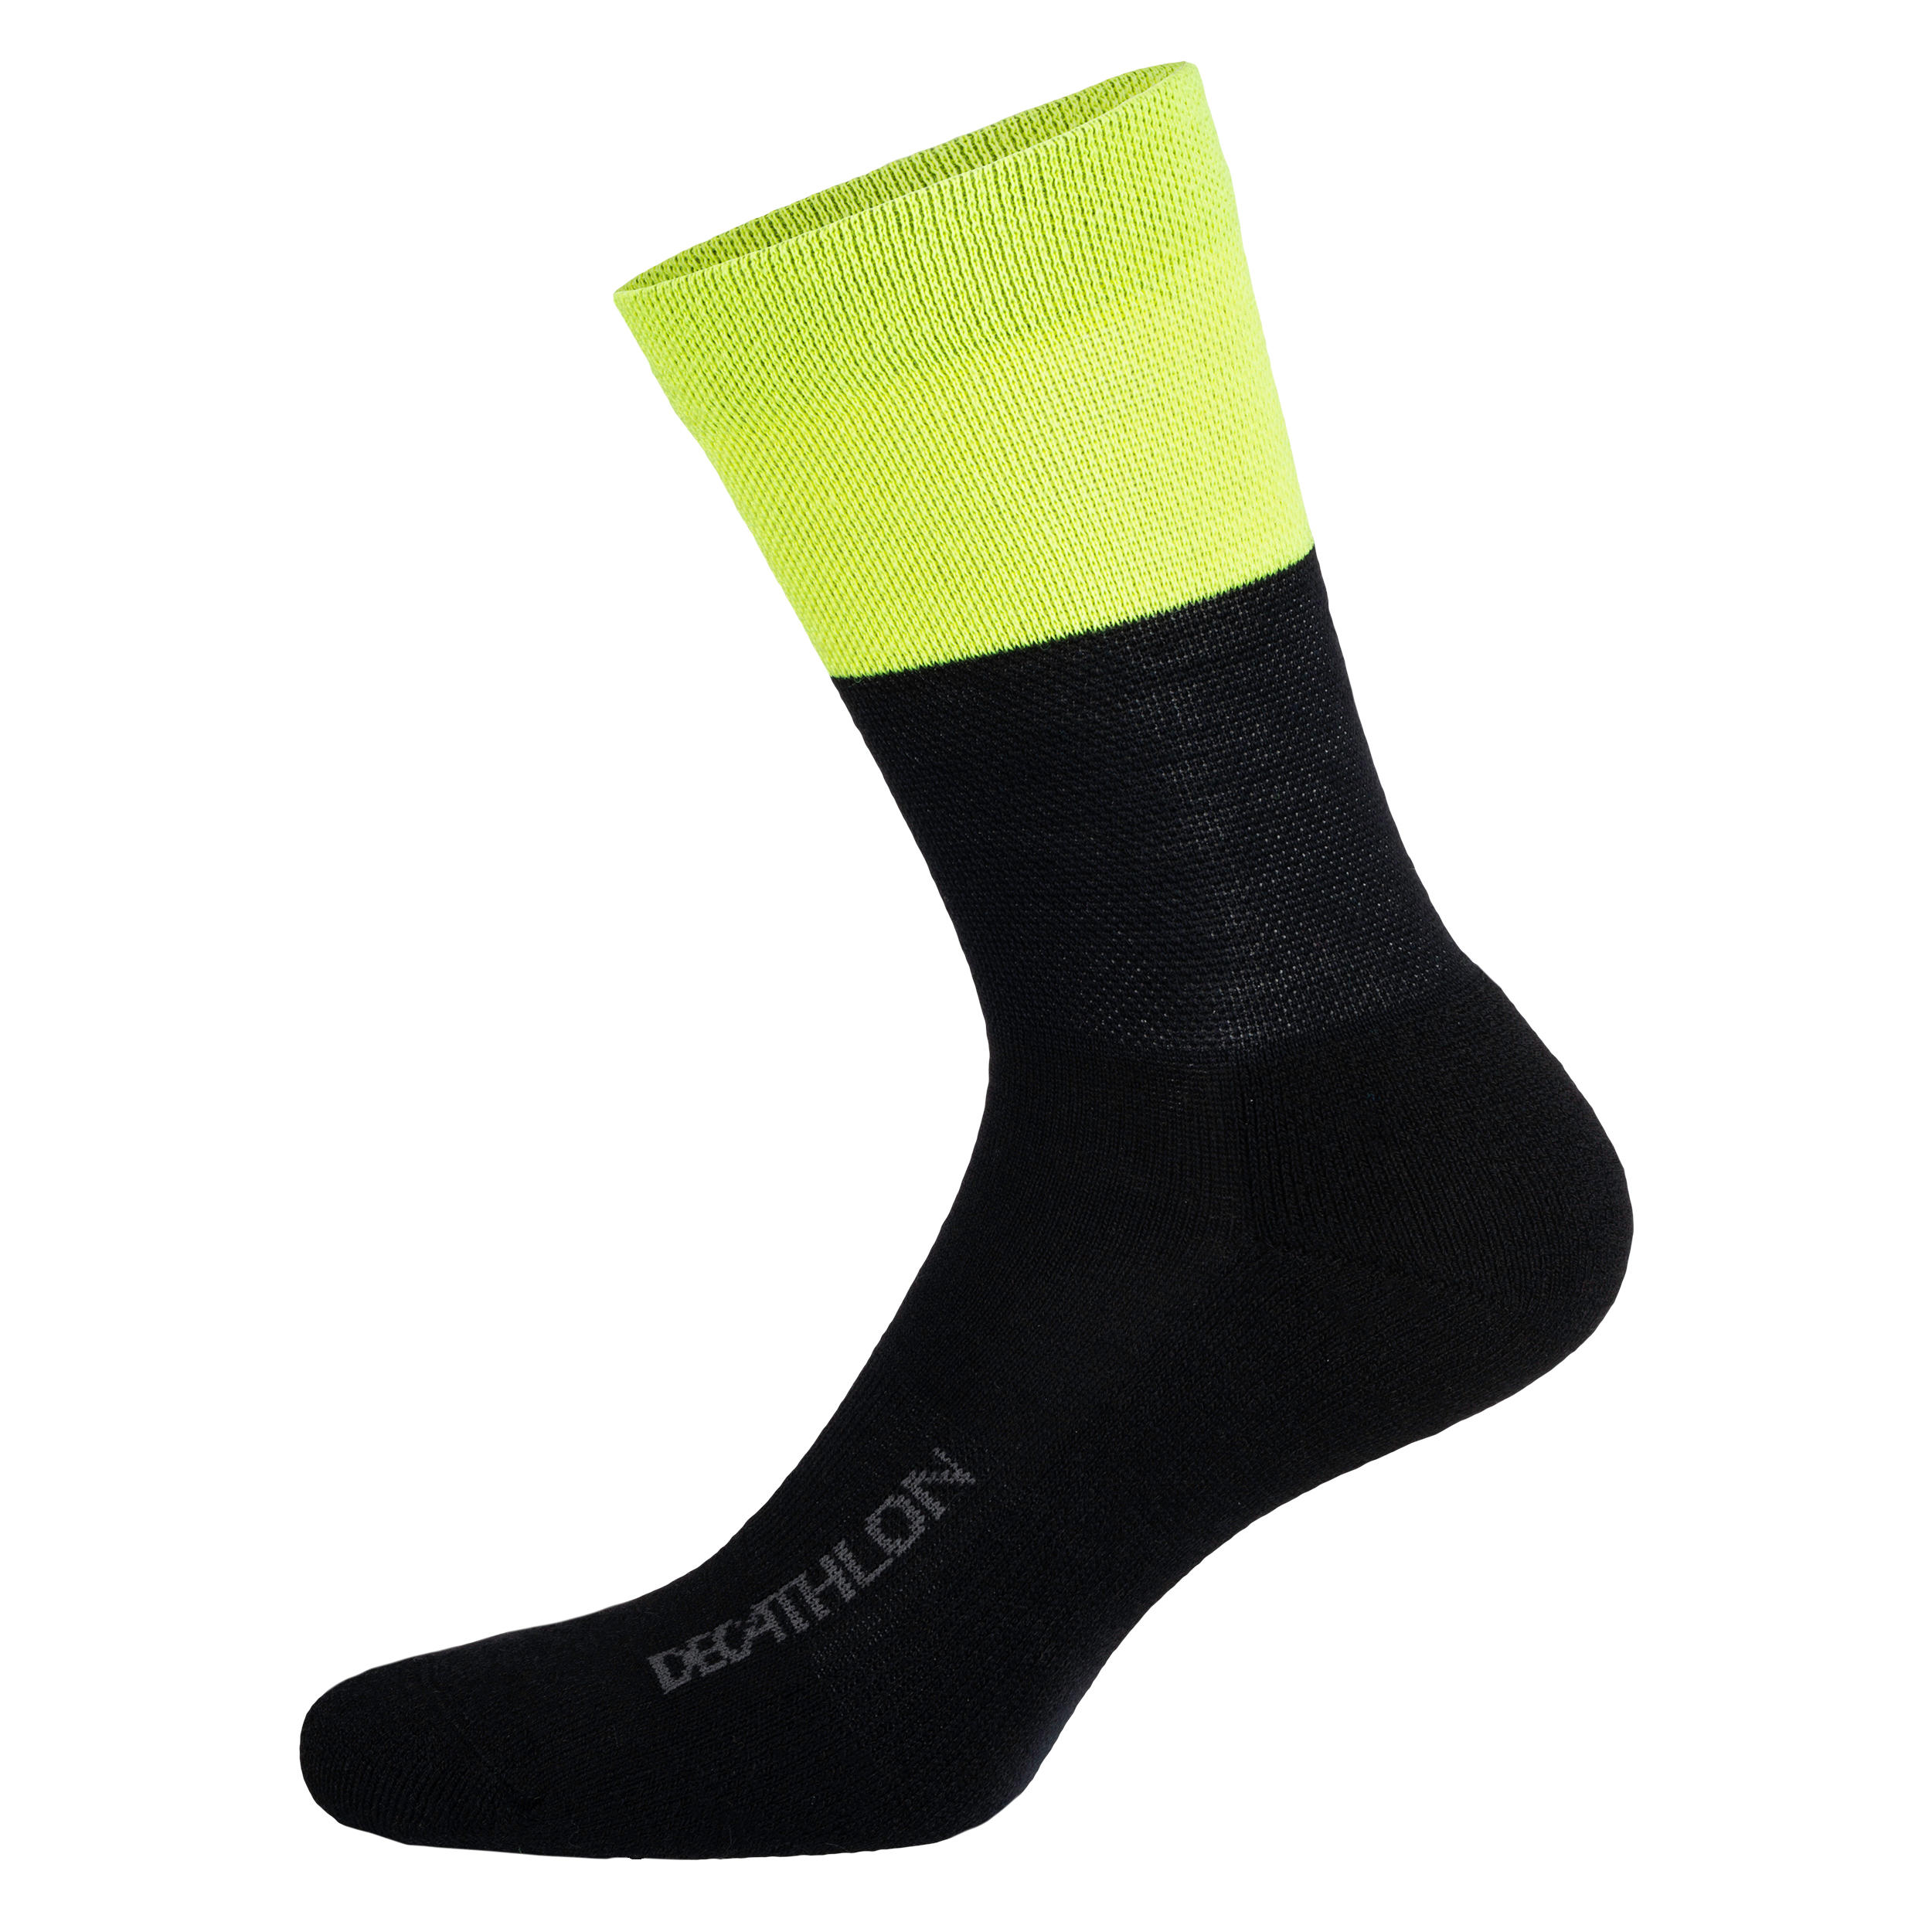 500 Winter Cycling Socks - Black/Neon Yellow 3/3